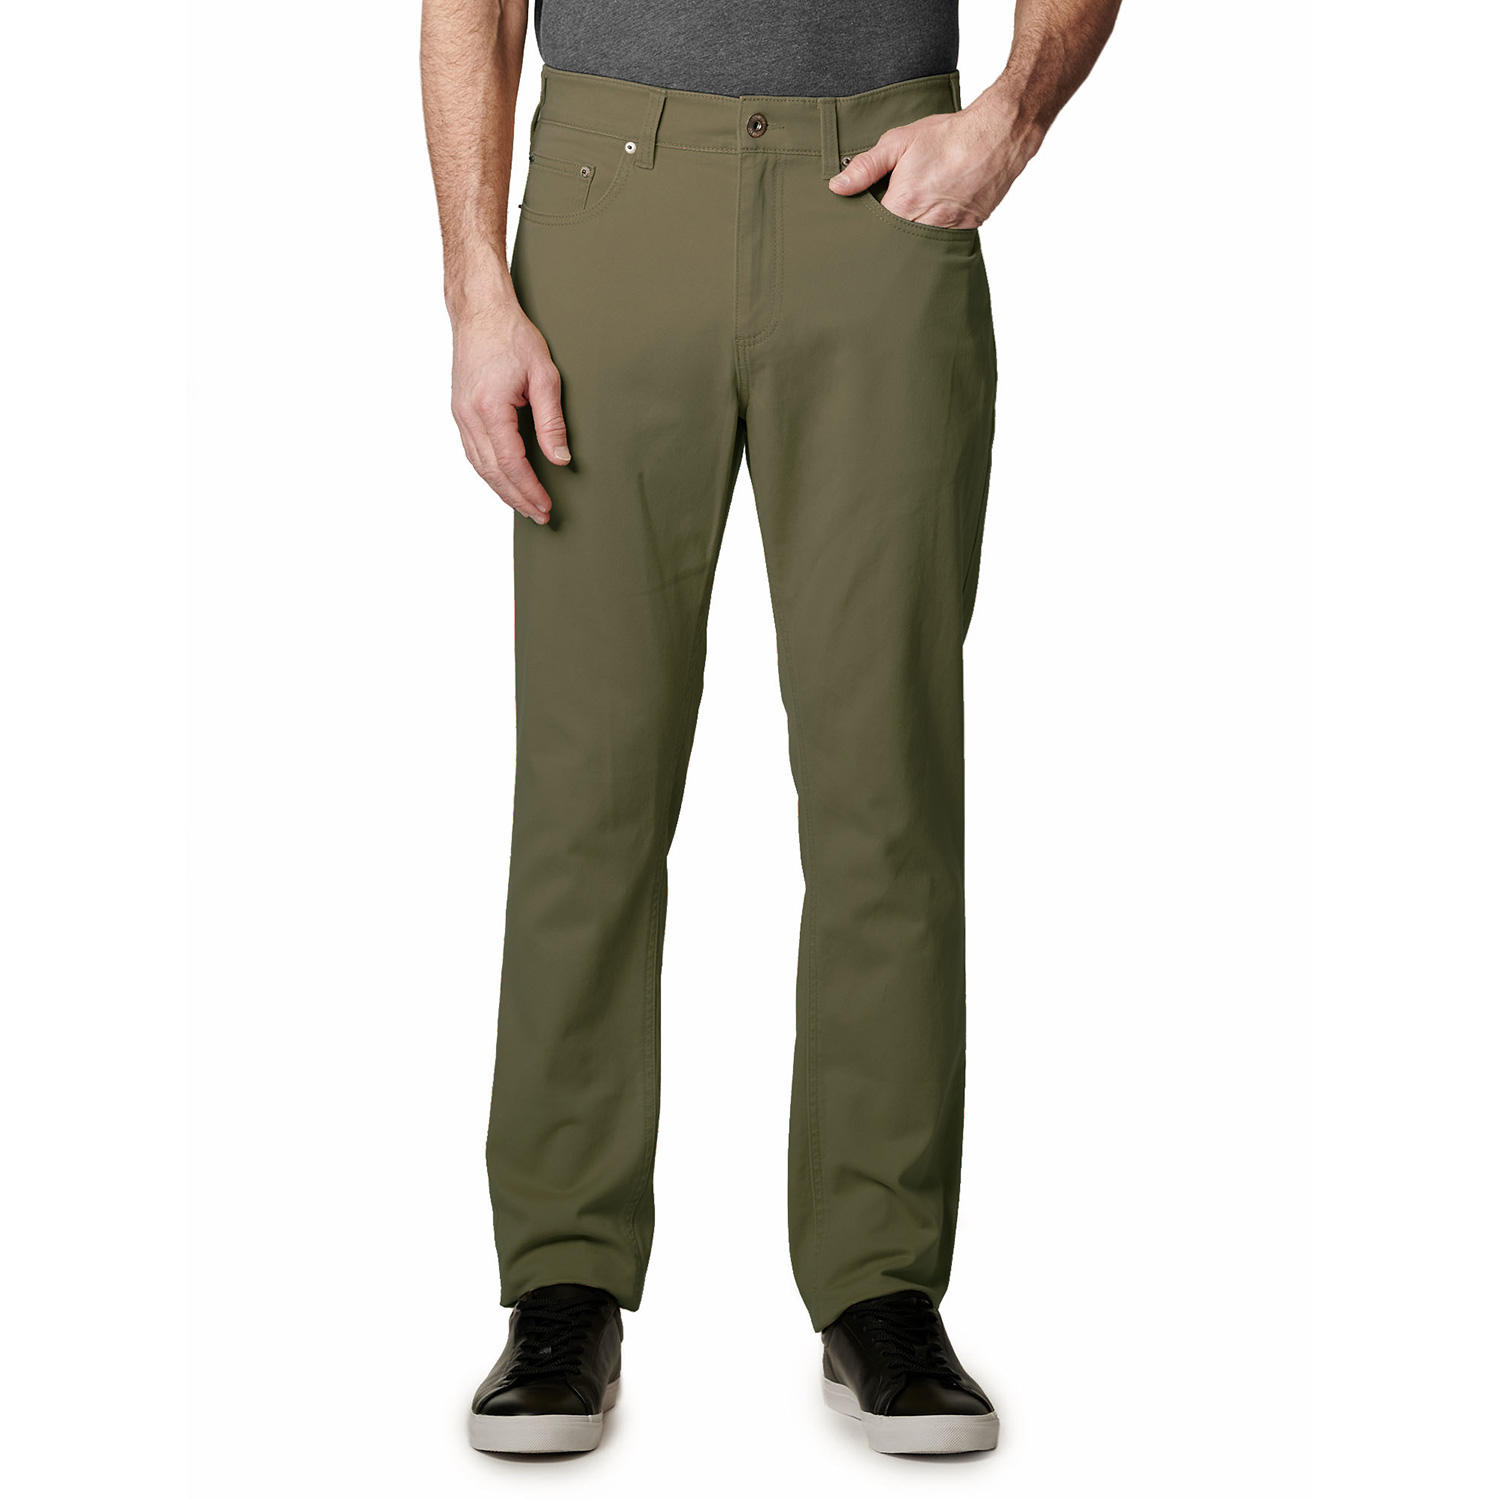 IRON Clothing PATRIOT Comfort Flex Waistband 5 Pocket Stretch Twill Pant - Turtle Green 34x34